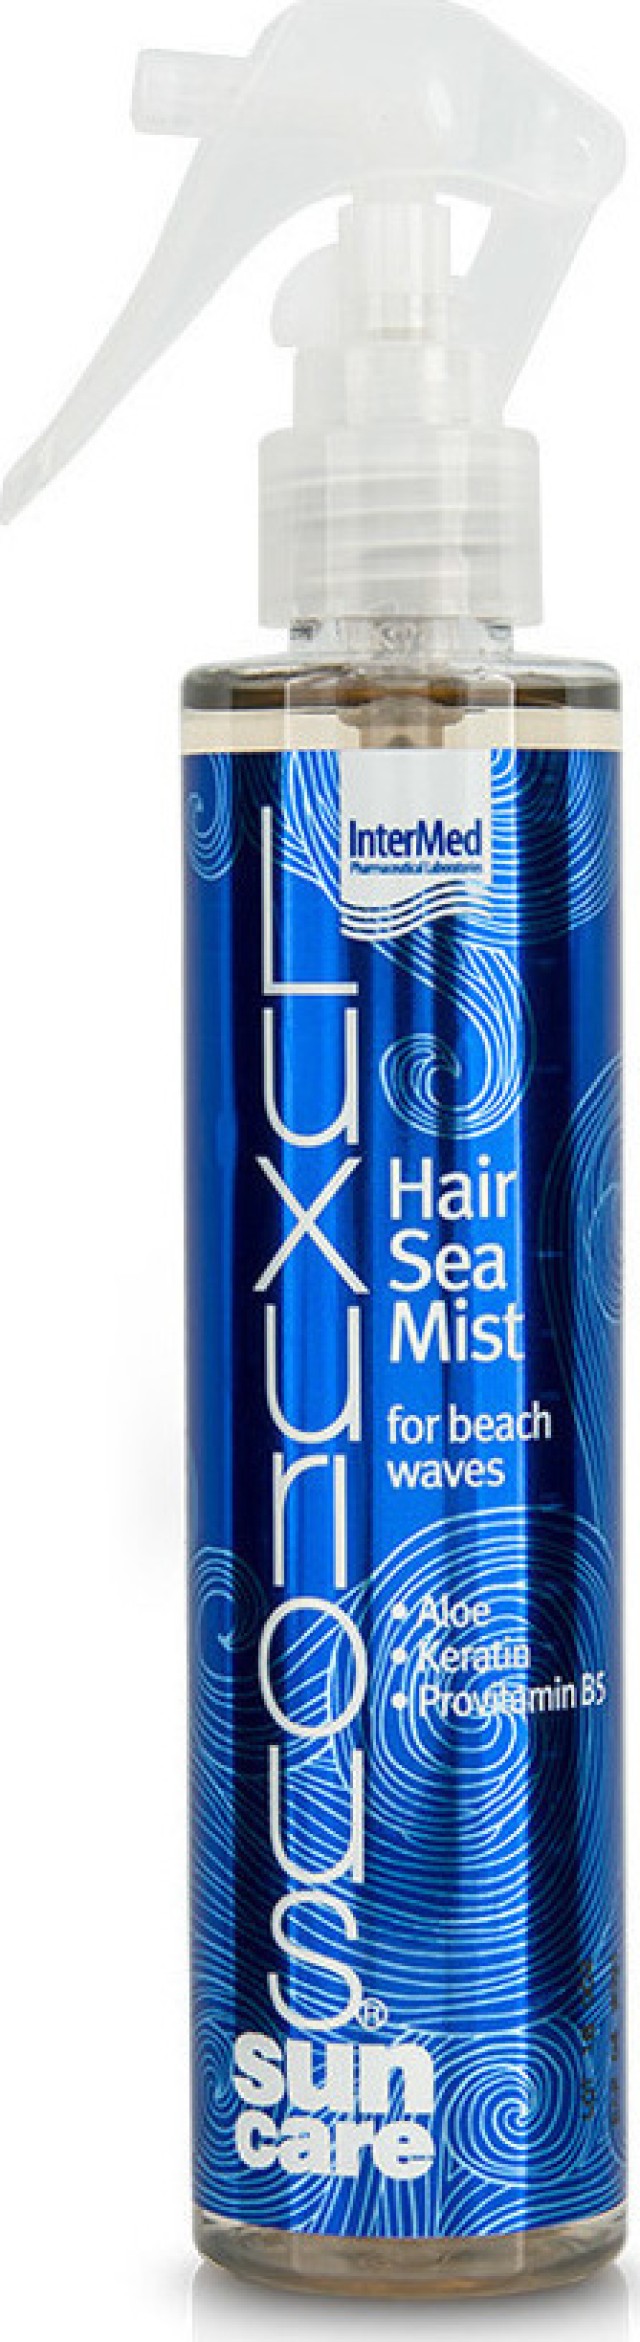 INTERMED Luxurious Hair Sea Mist, Σπρέι Για Όγκο & Θρέψη Μαλλιών 200ml